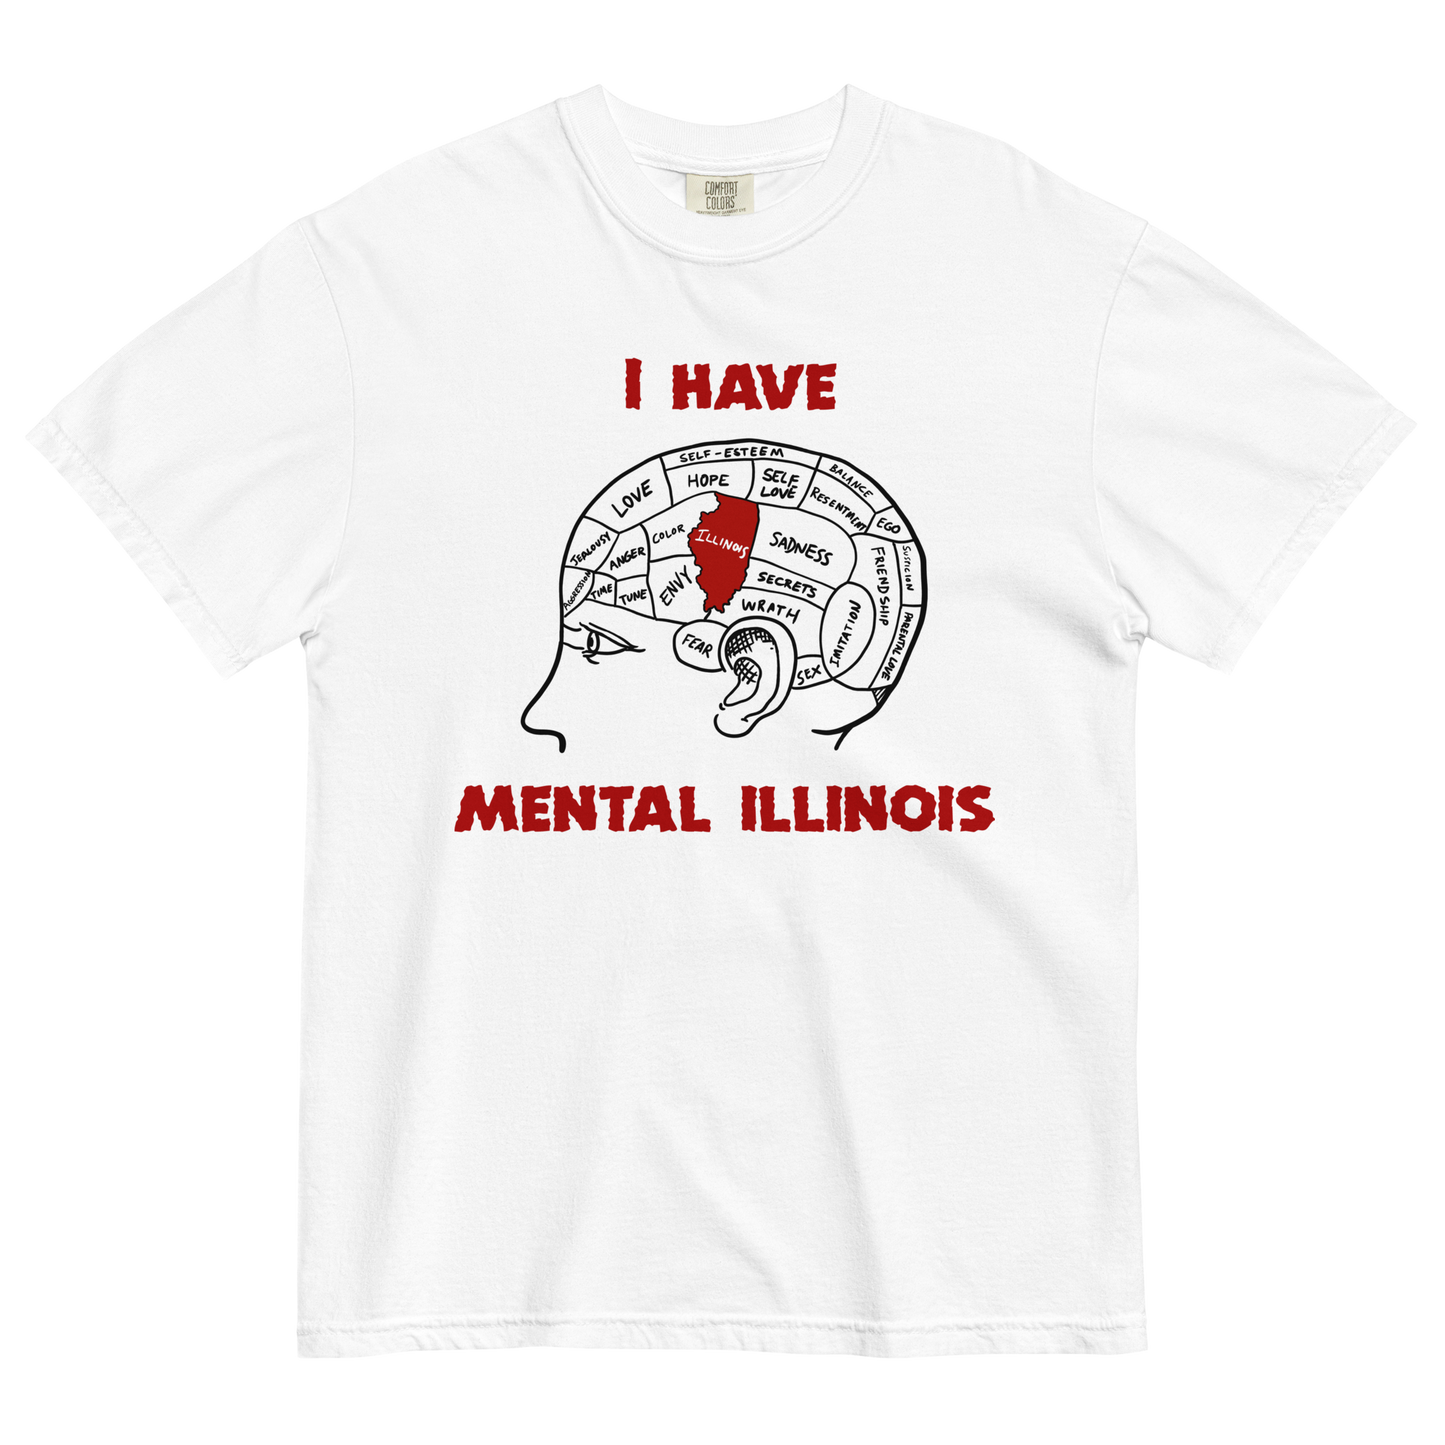 I Have Mental Illinois.